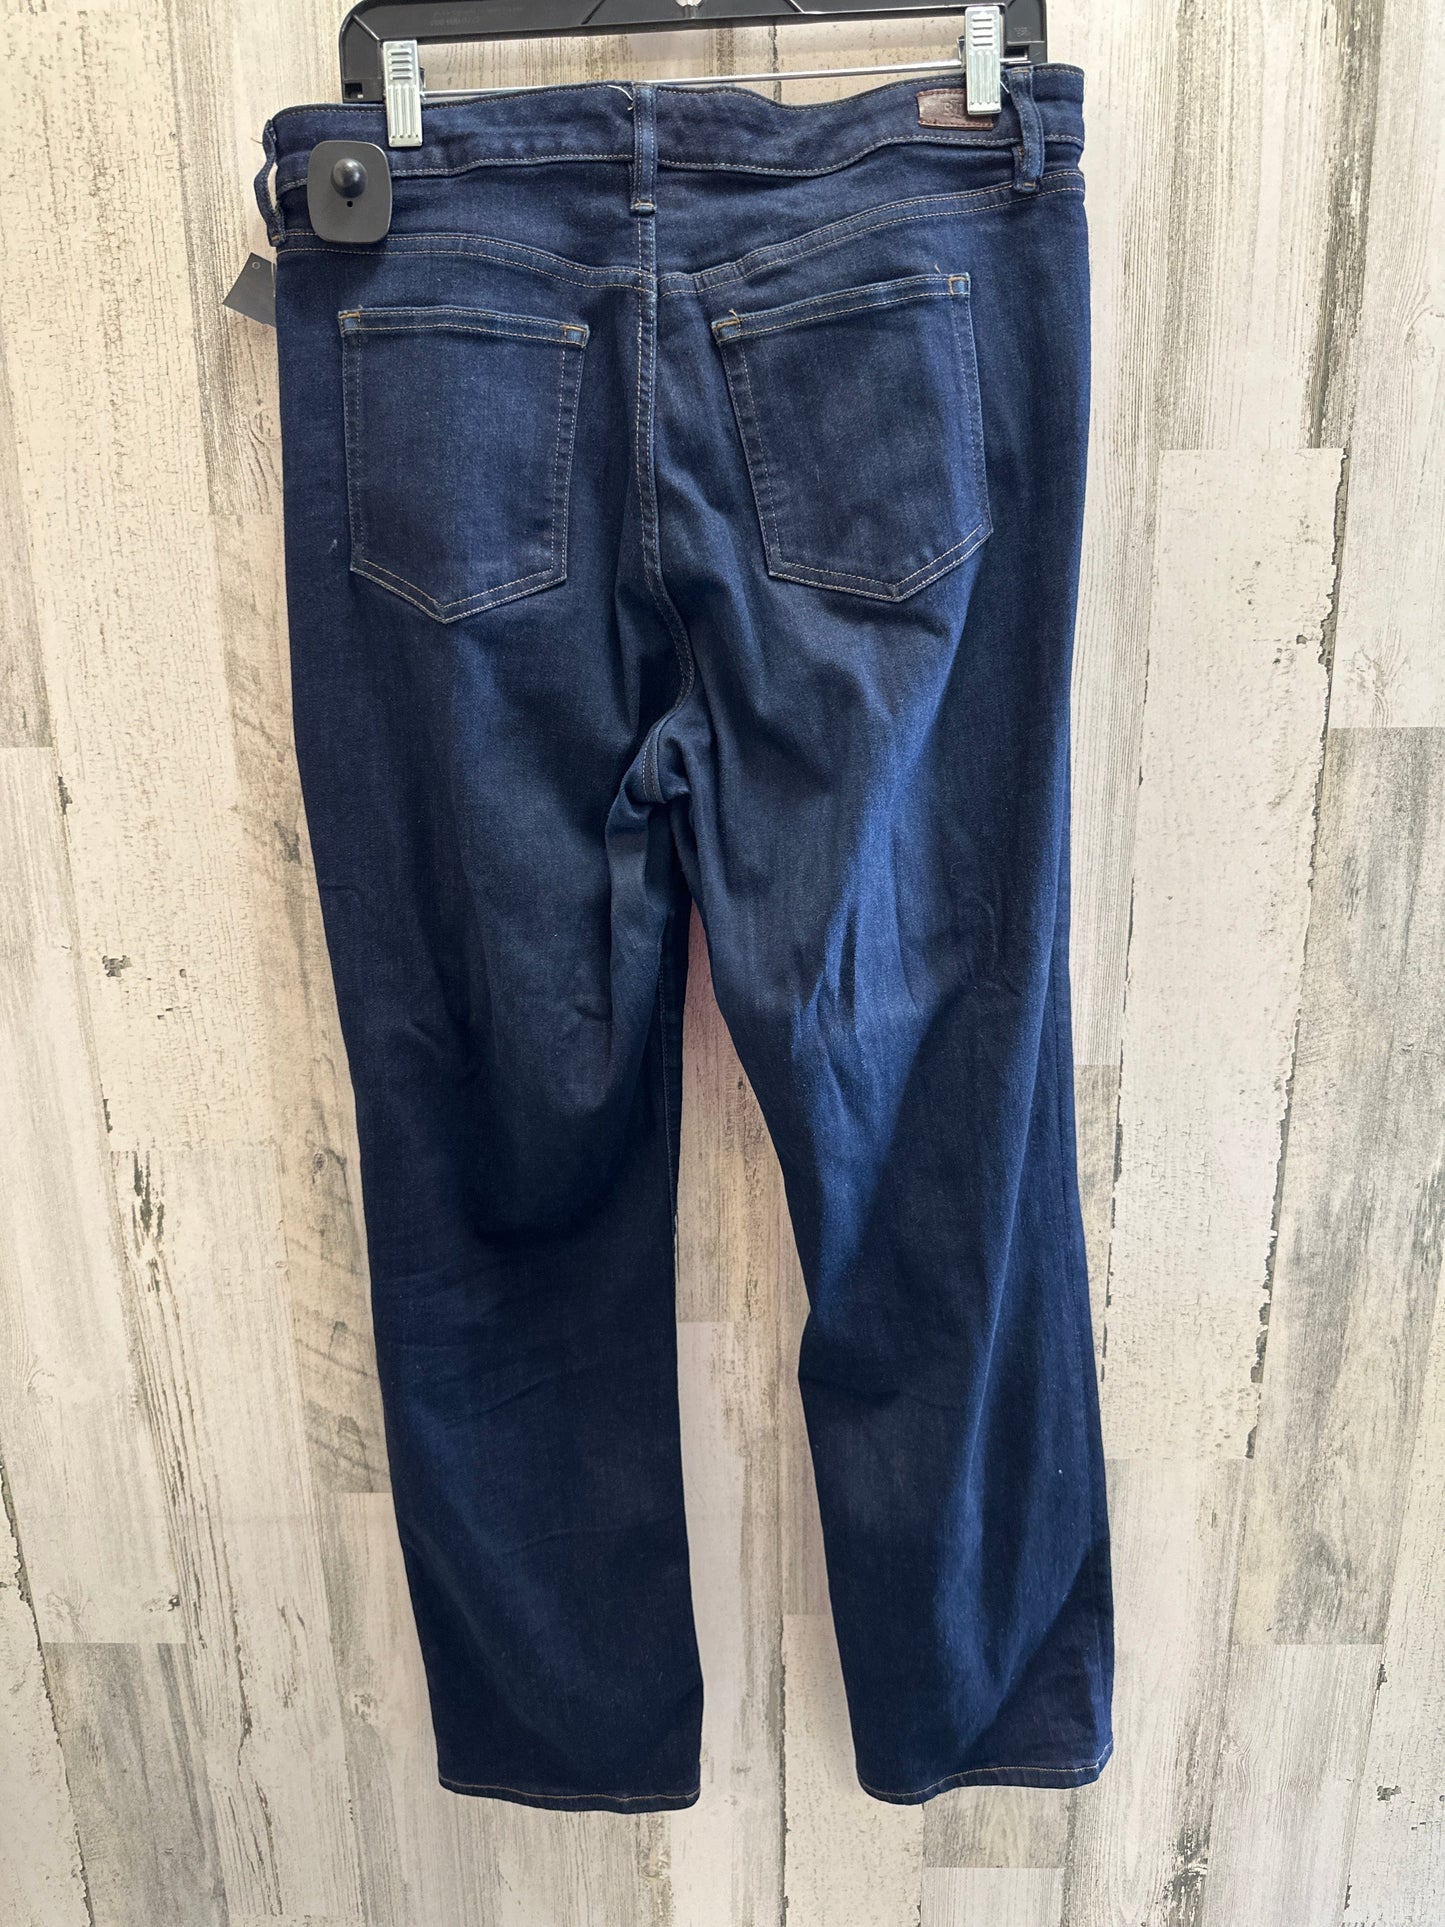 Blue Denim Jeans Straight Ralph Lauren, Size 14